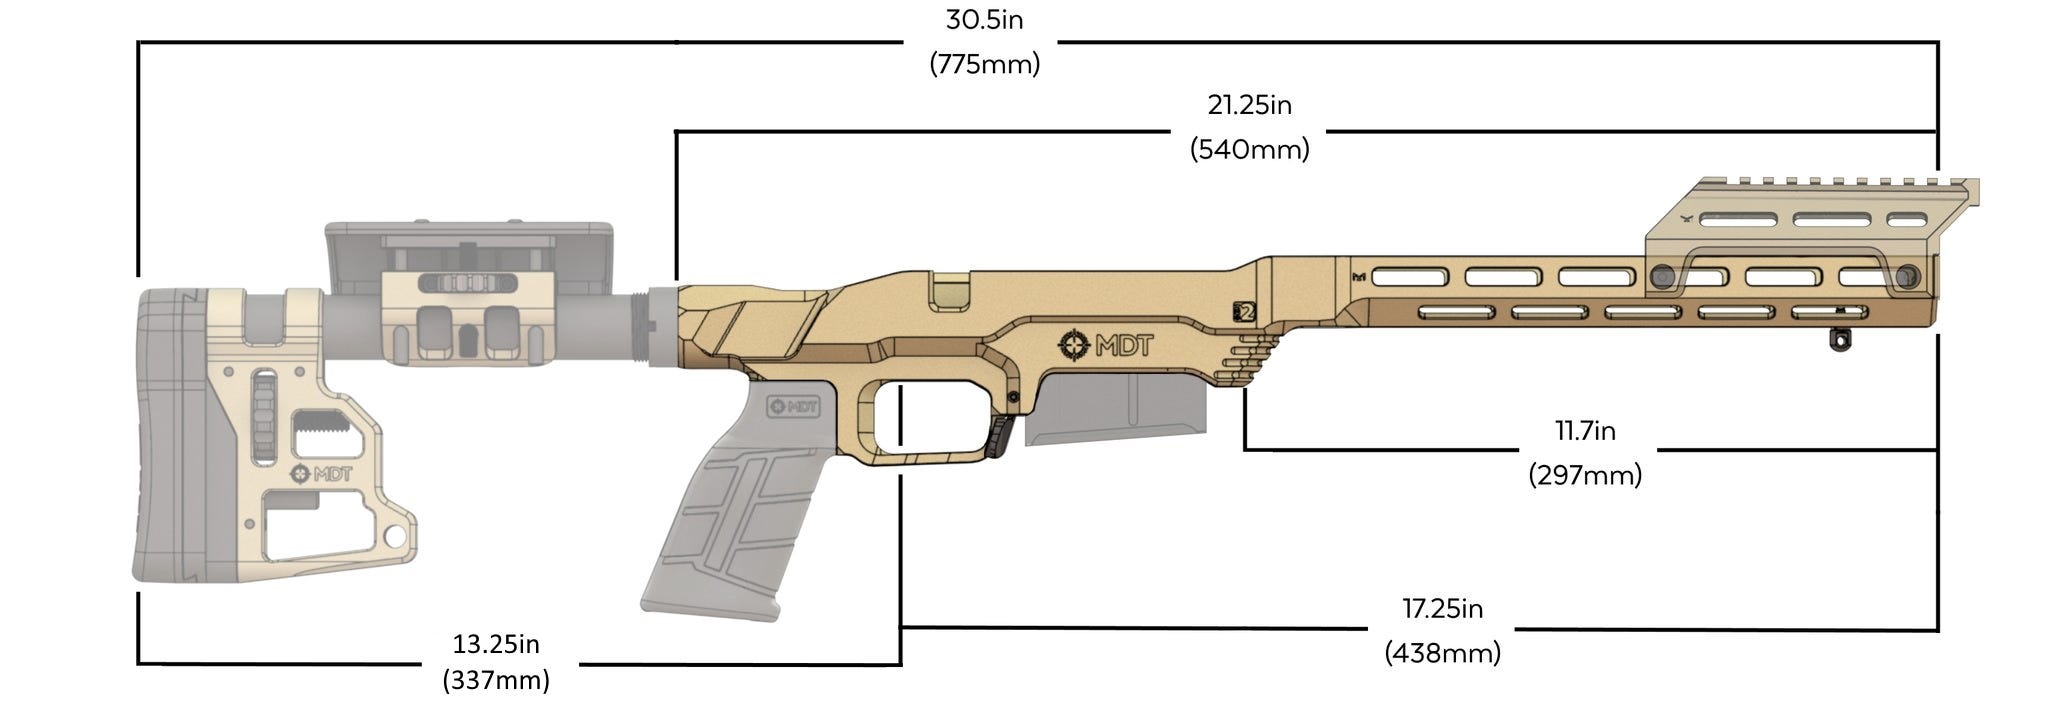 mdt lss-xl carbine interface dimensions